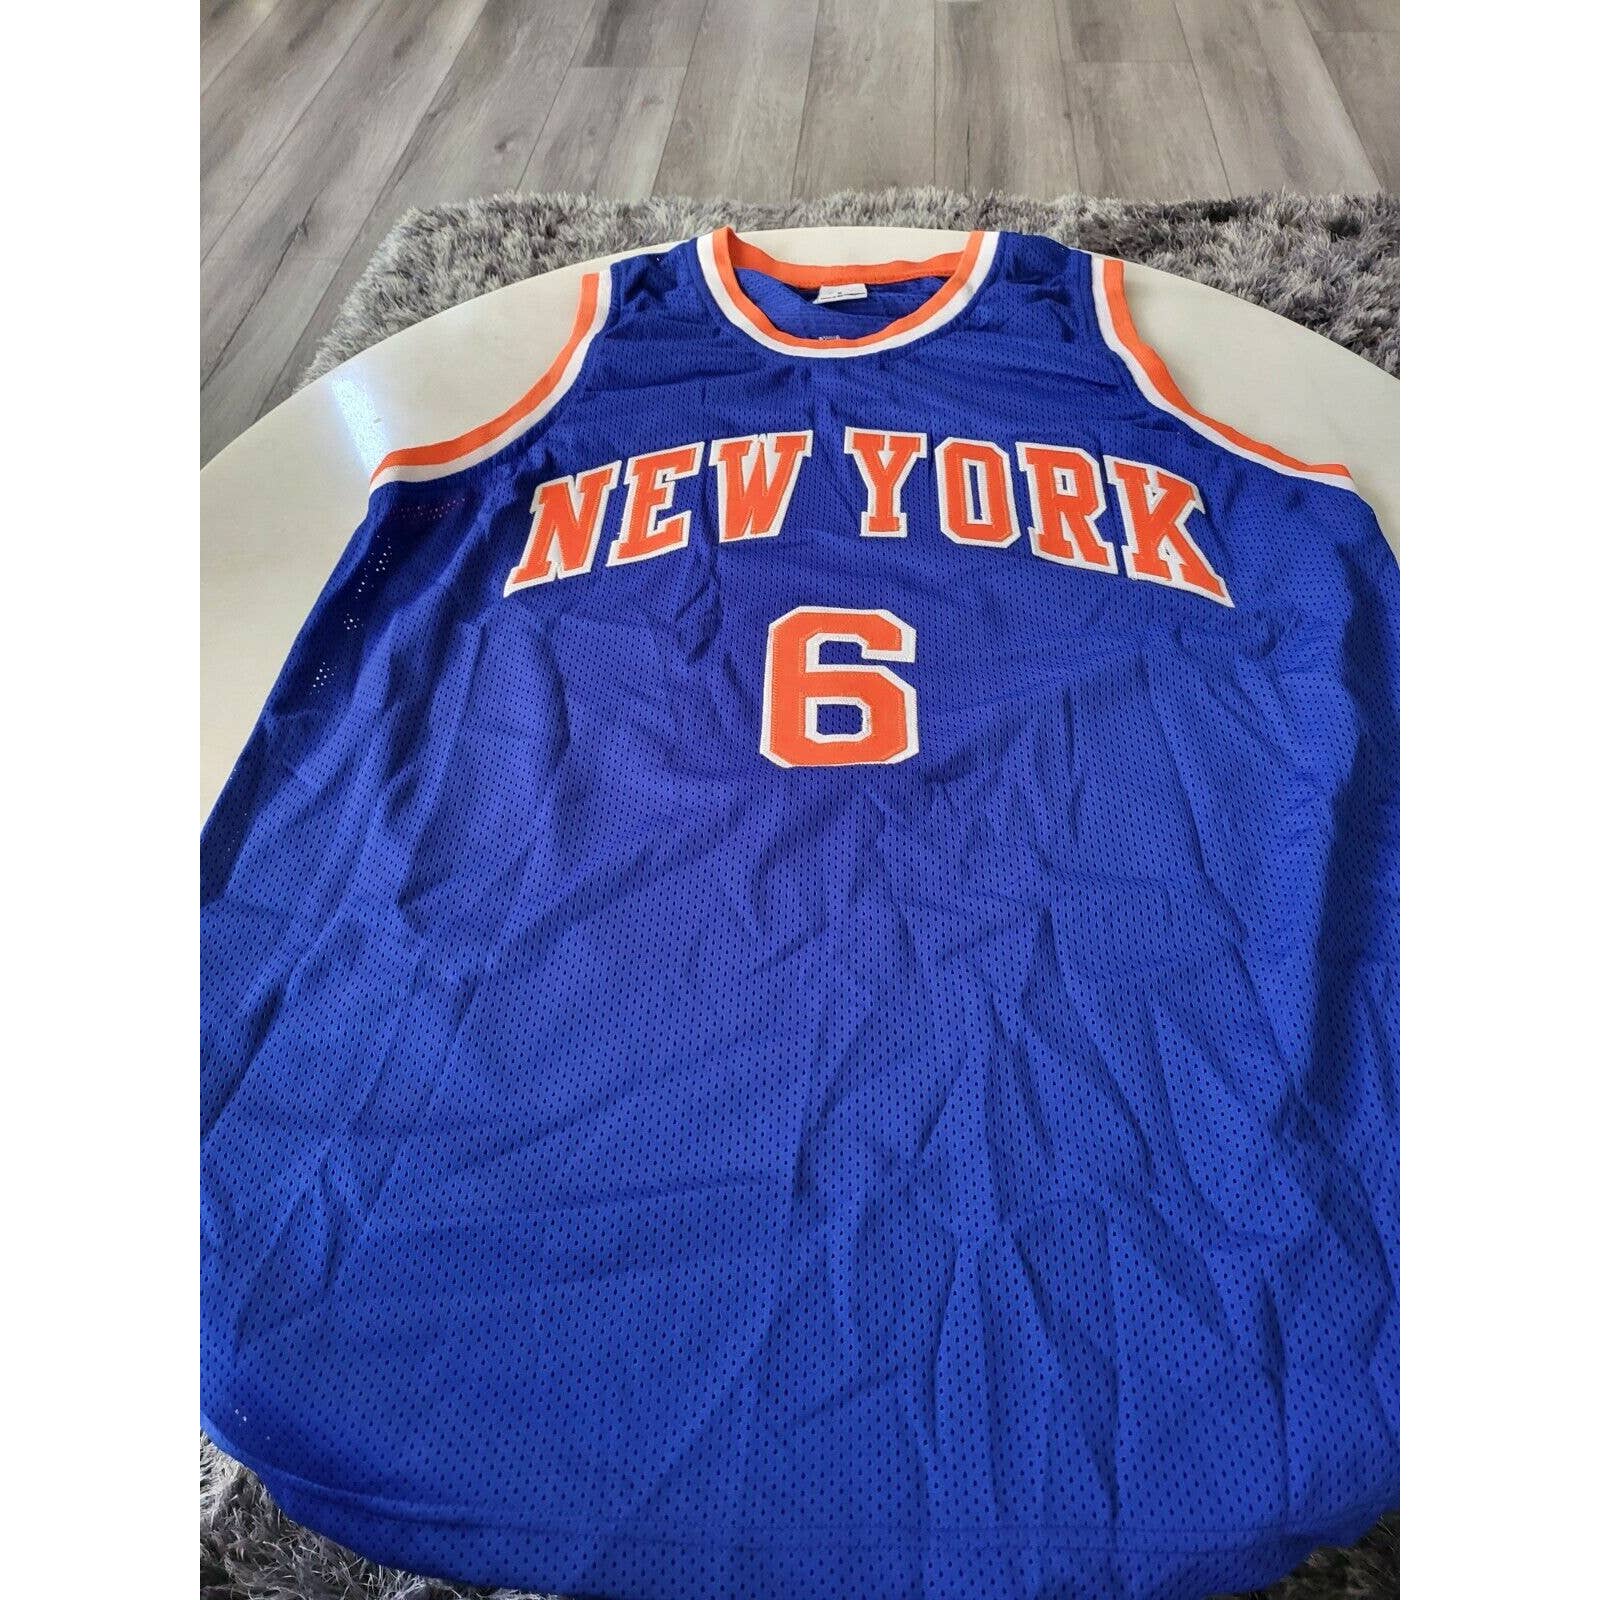 Kristaps Porzingis Autographed/Signed Jersey JSA COA New York Knicks NY - TreasuresEvolved